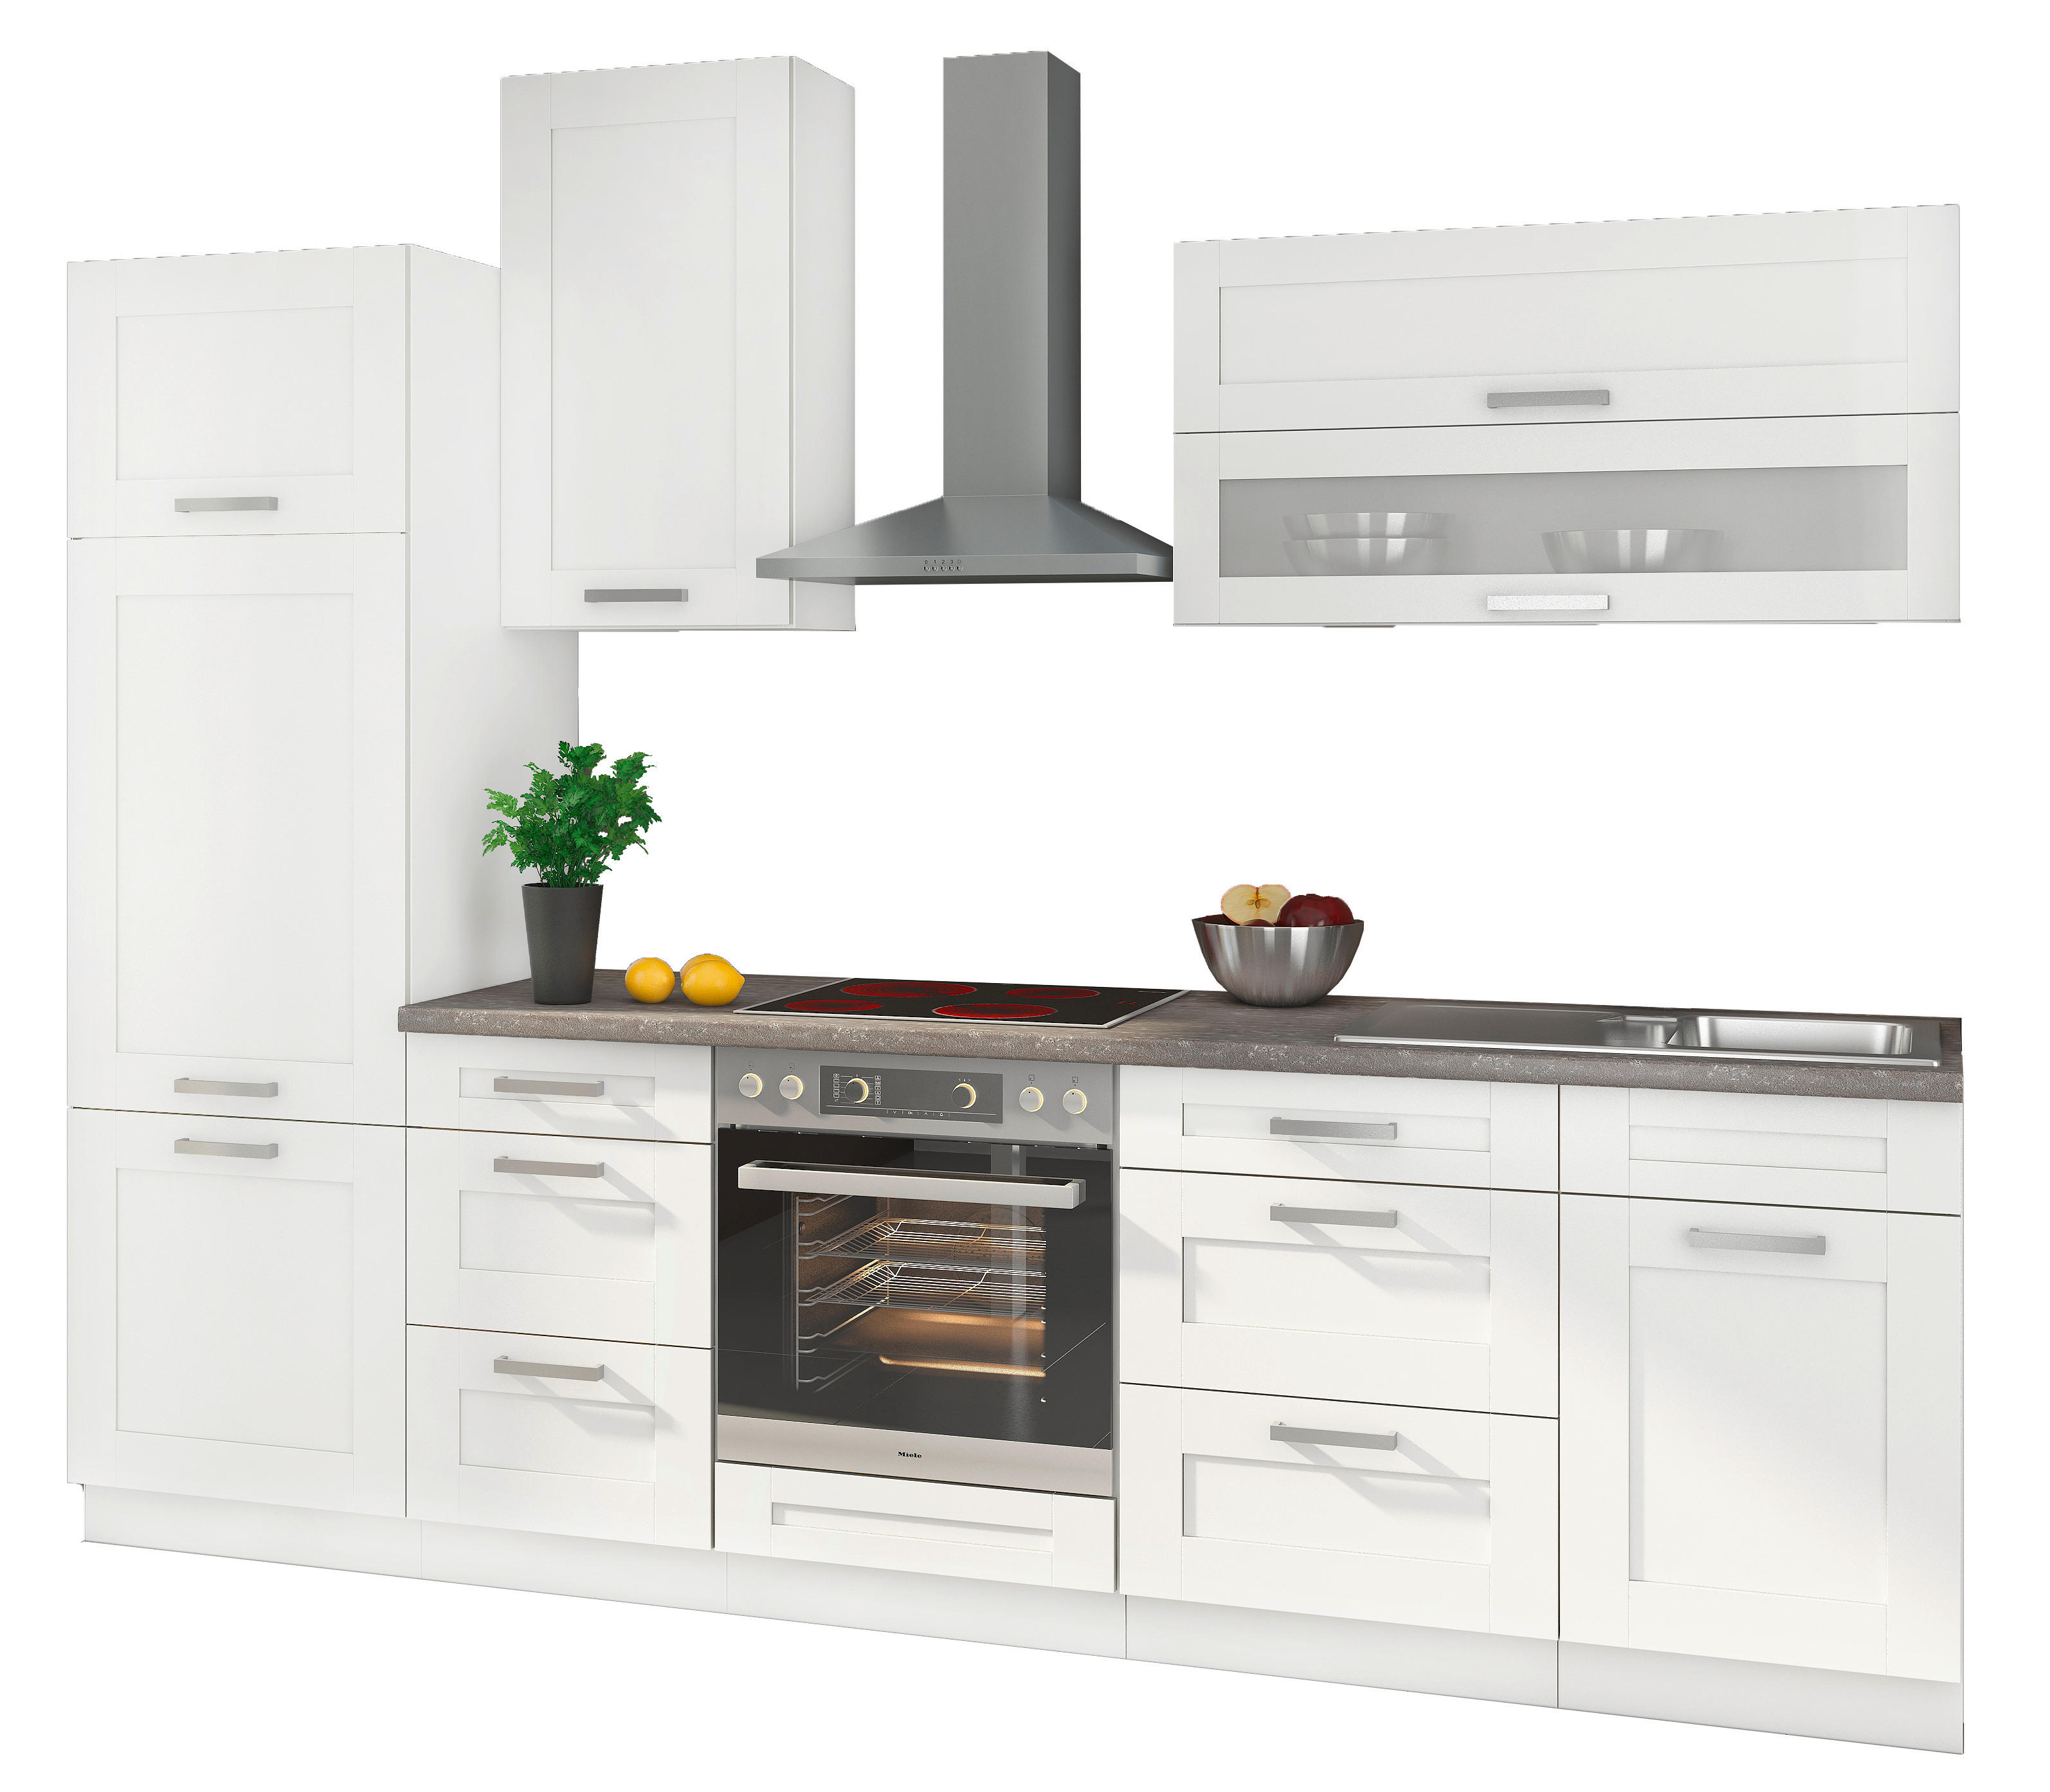 Küchenblock Move 280 weiß matt B/H/T: ca. 280x230x60 cm Move 280 - weiß/Alu (280,00/230,00/60,00cm)